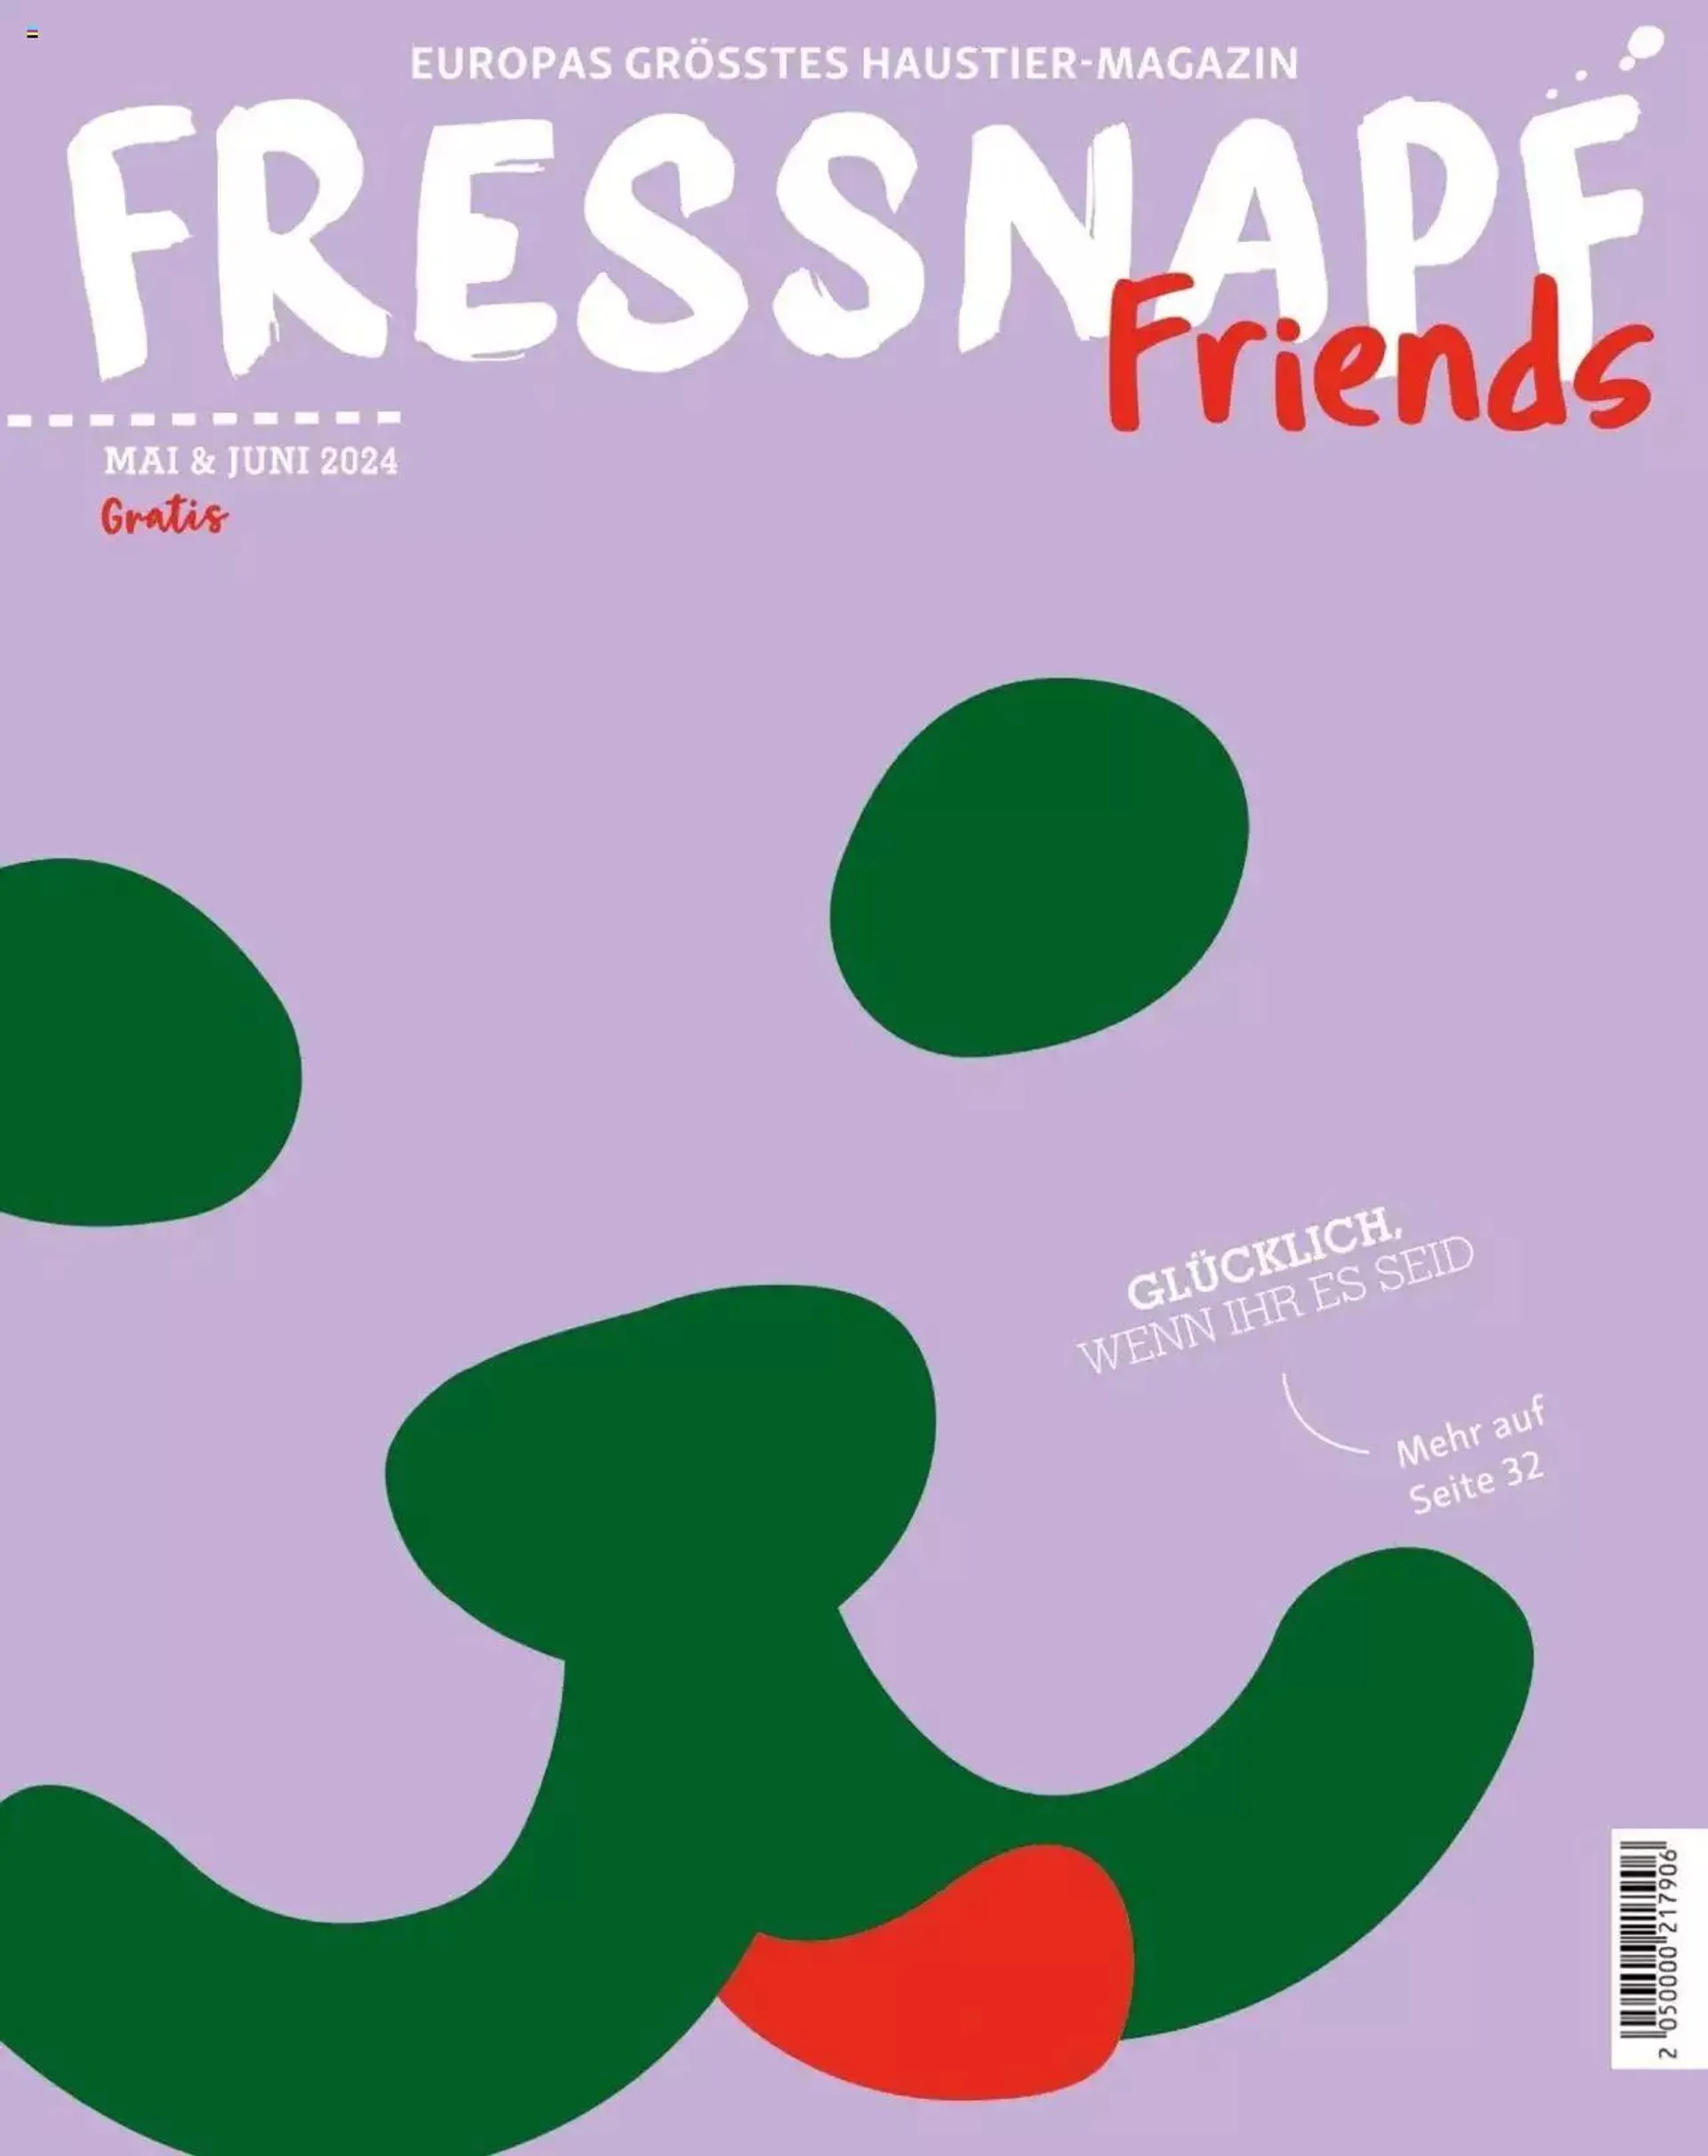 Fressnapf Friends 03/24 - 0